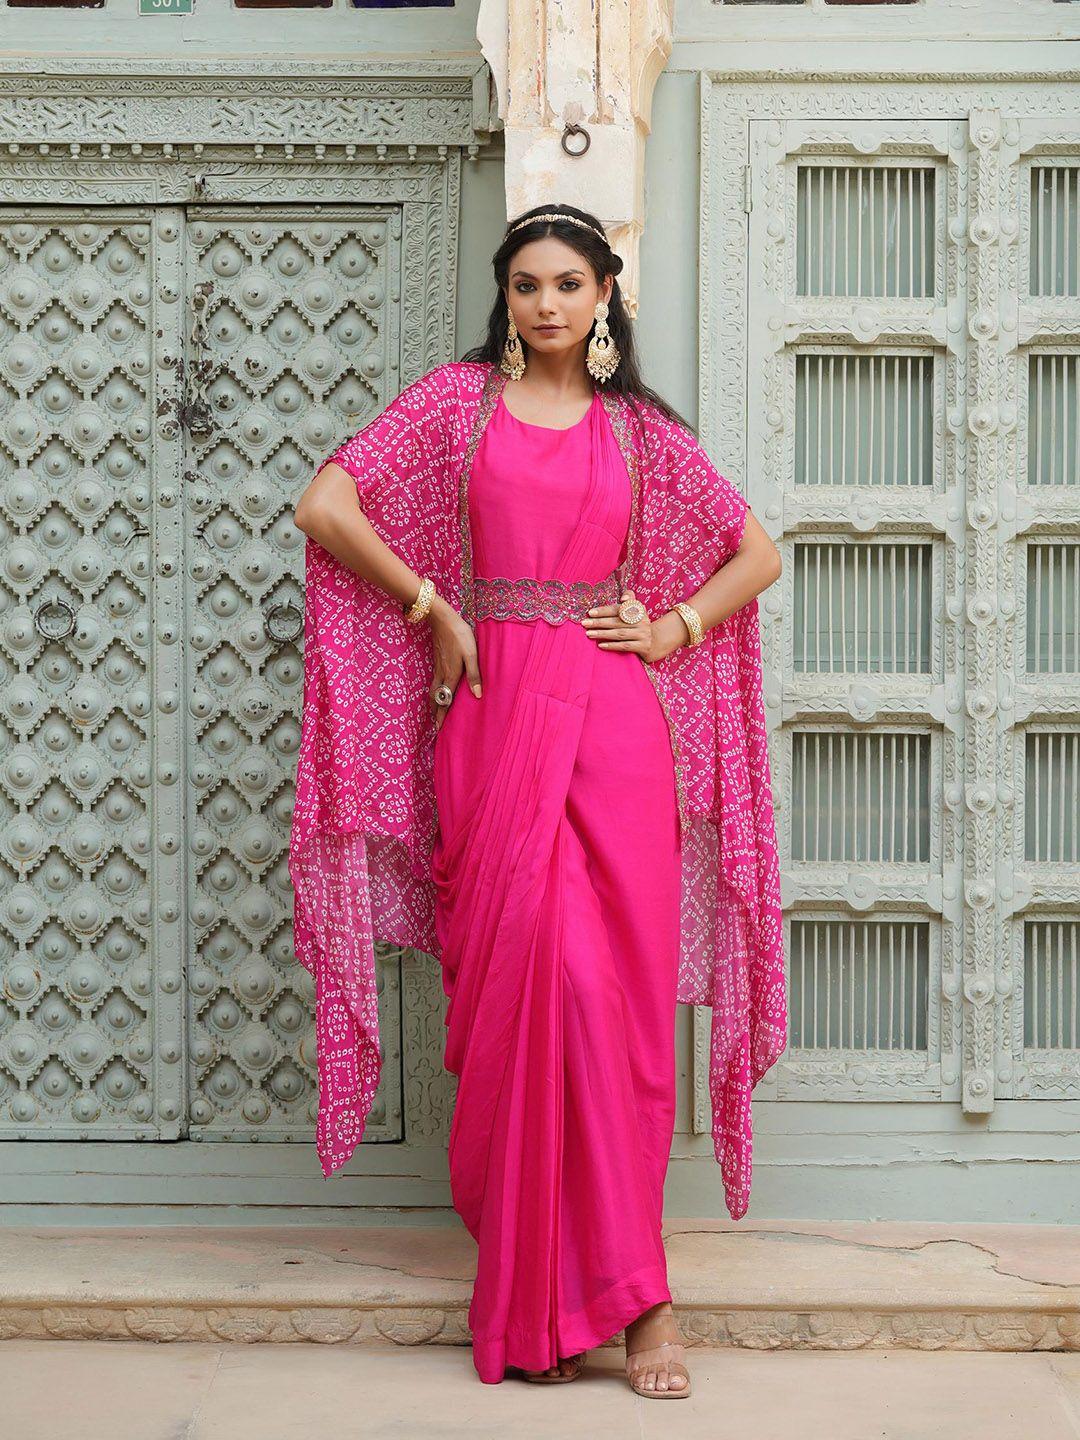 scakhi pink and white leheriya beads and stones embellished ready to wear leheriya saree